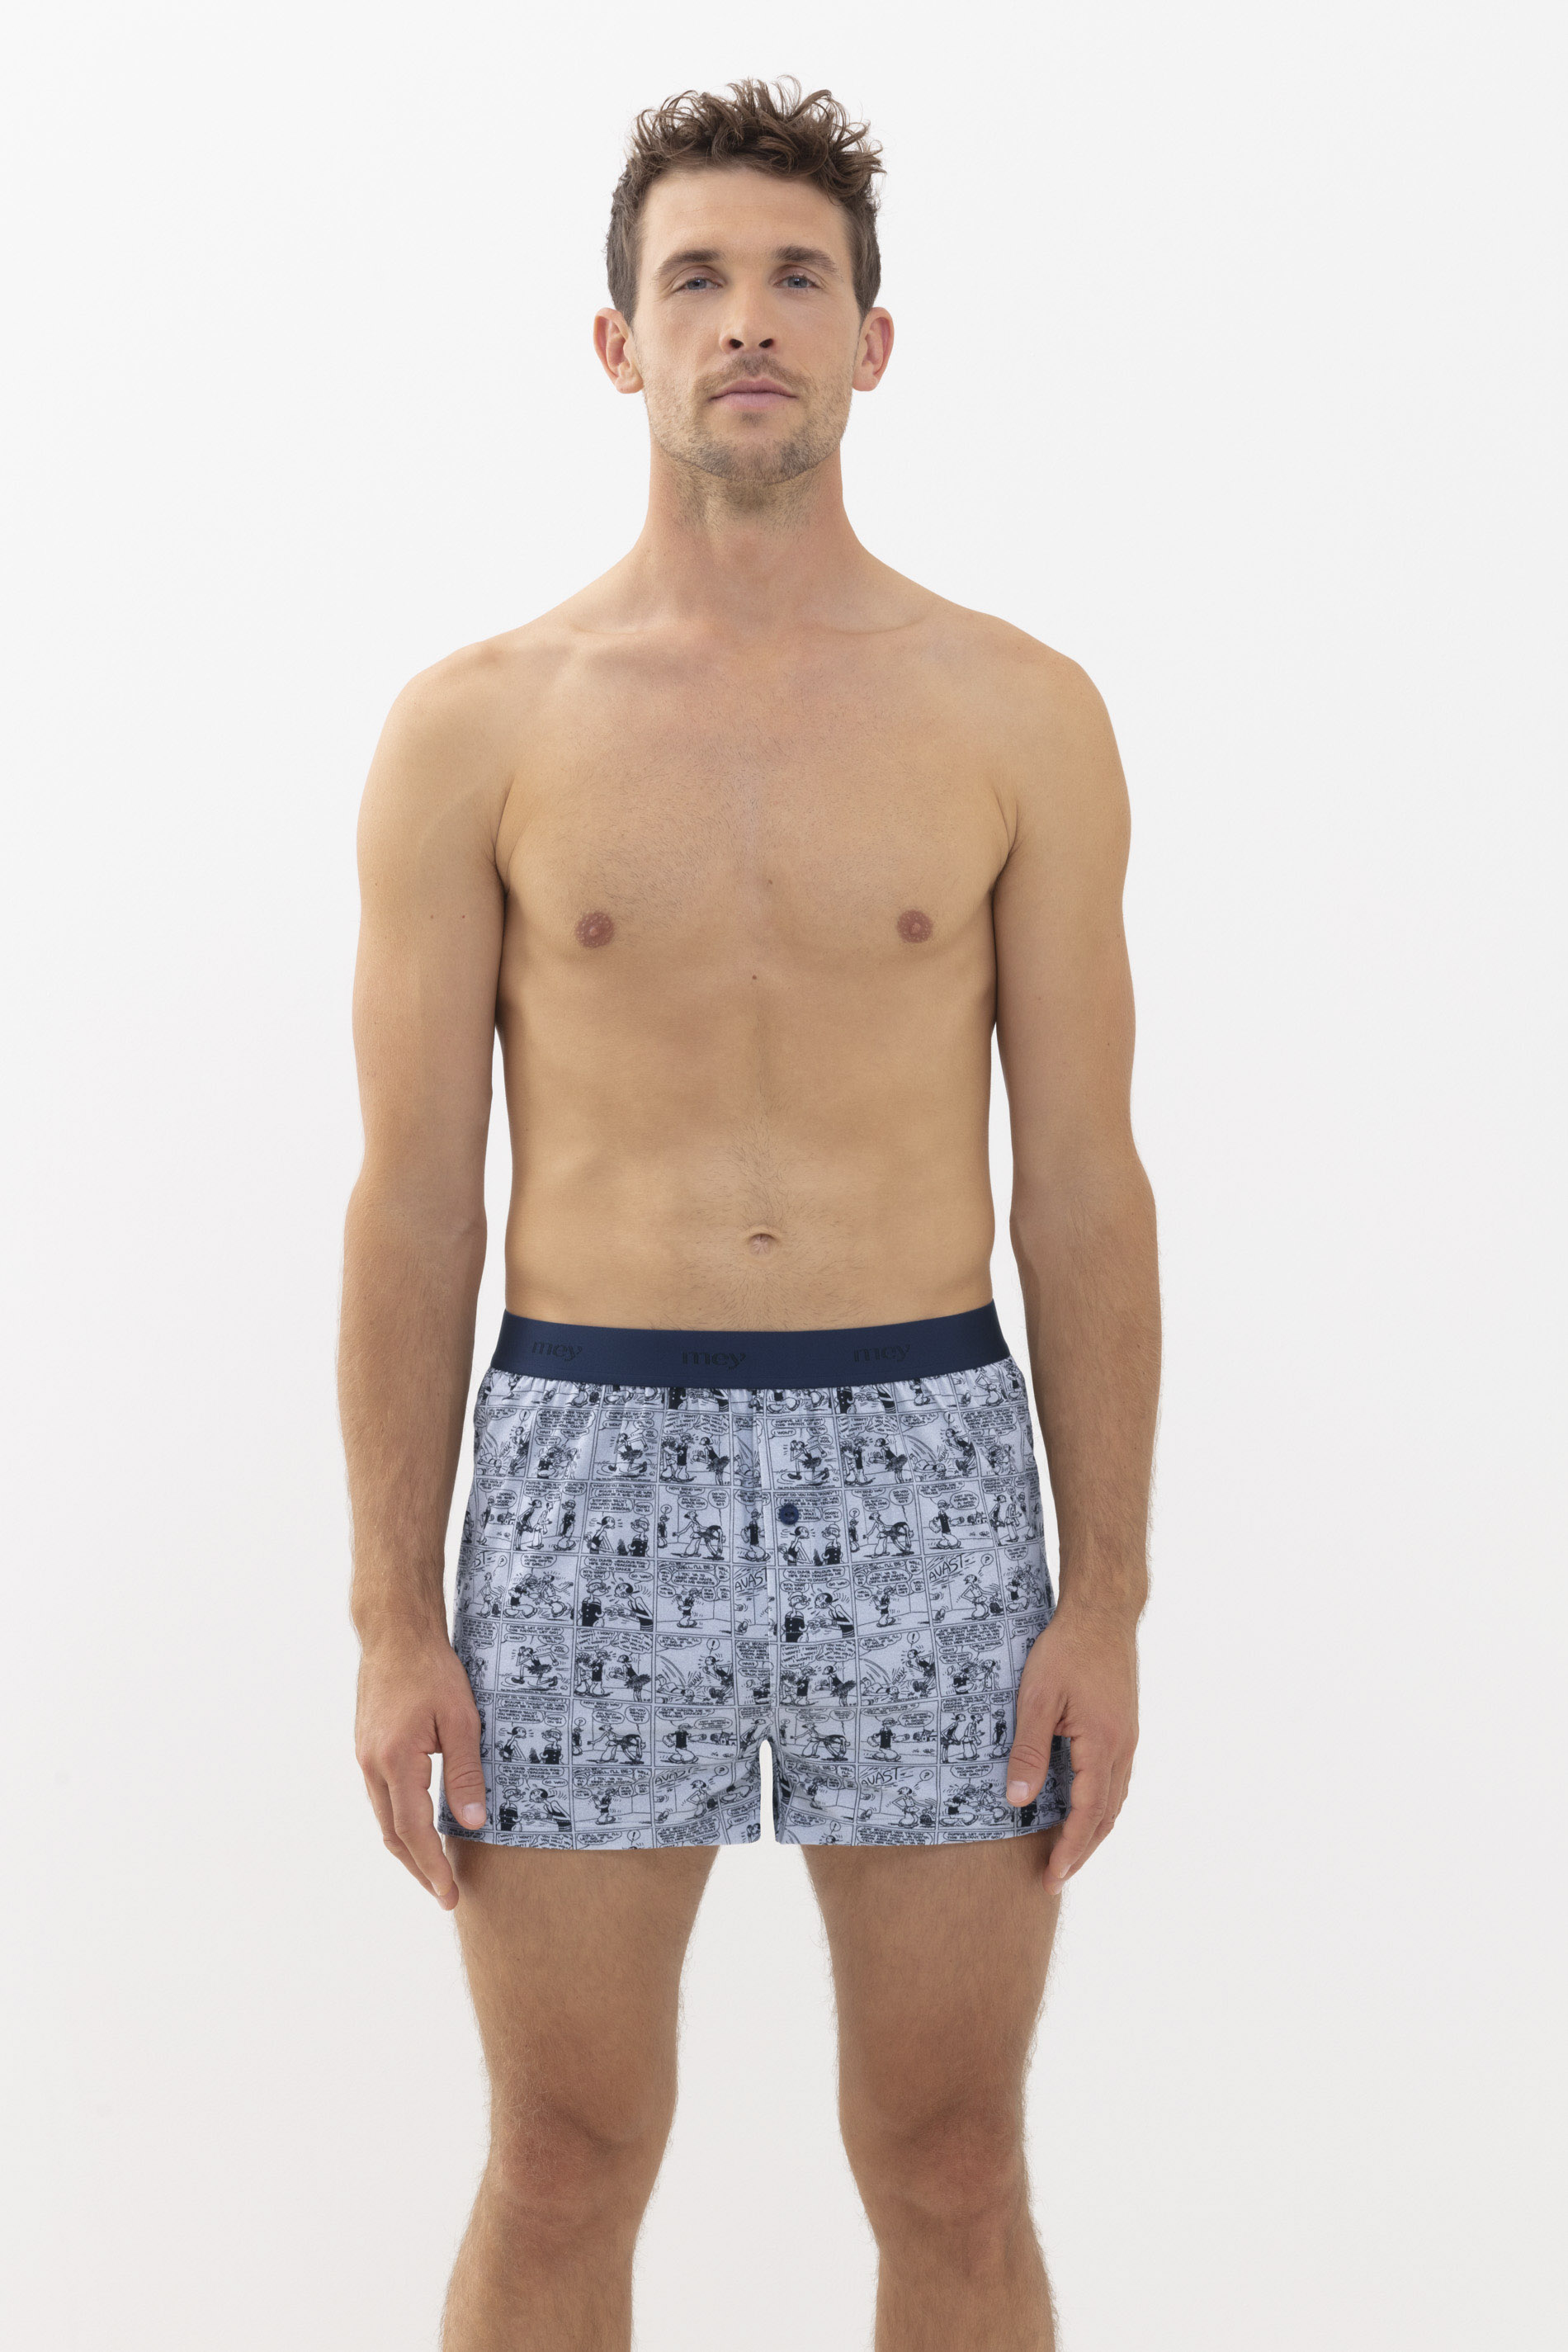 Boxer-Shorts Tin Grey Serie POPEYE©xMEY Frontansicht | mey®